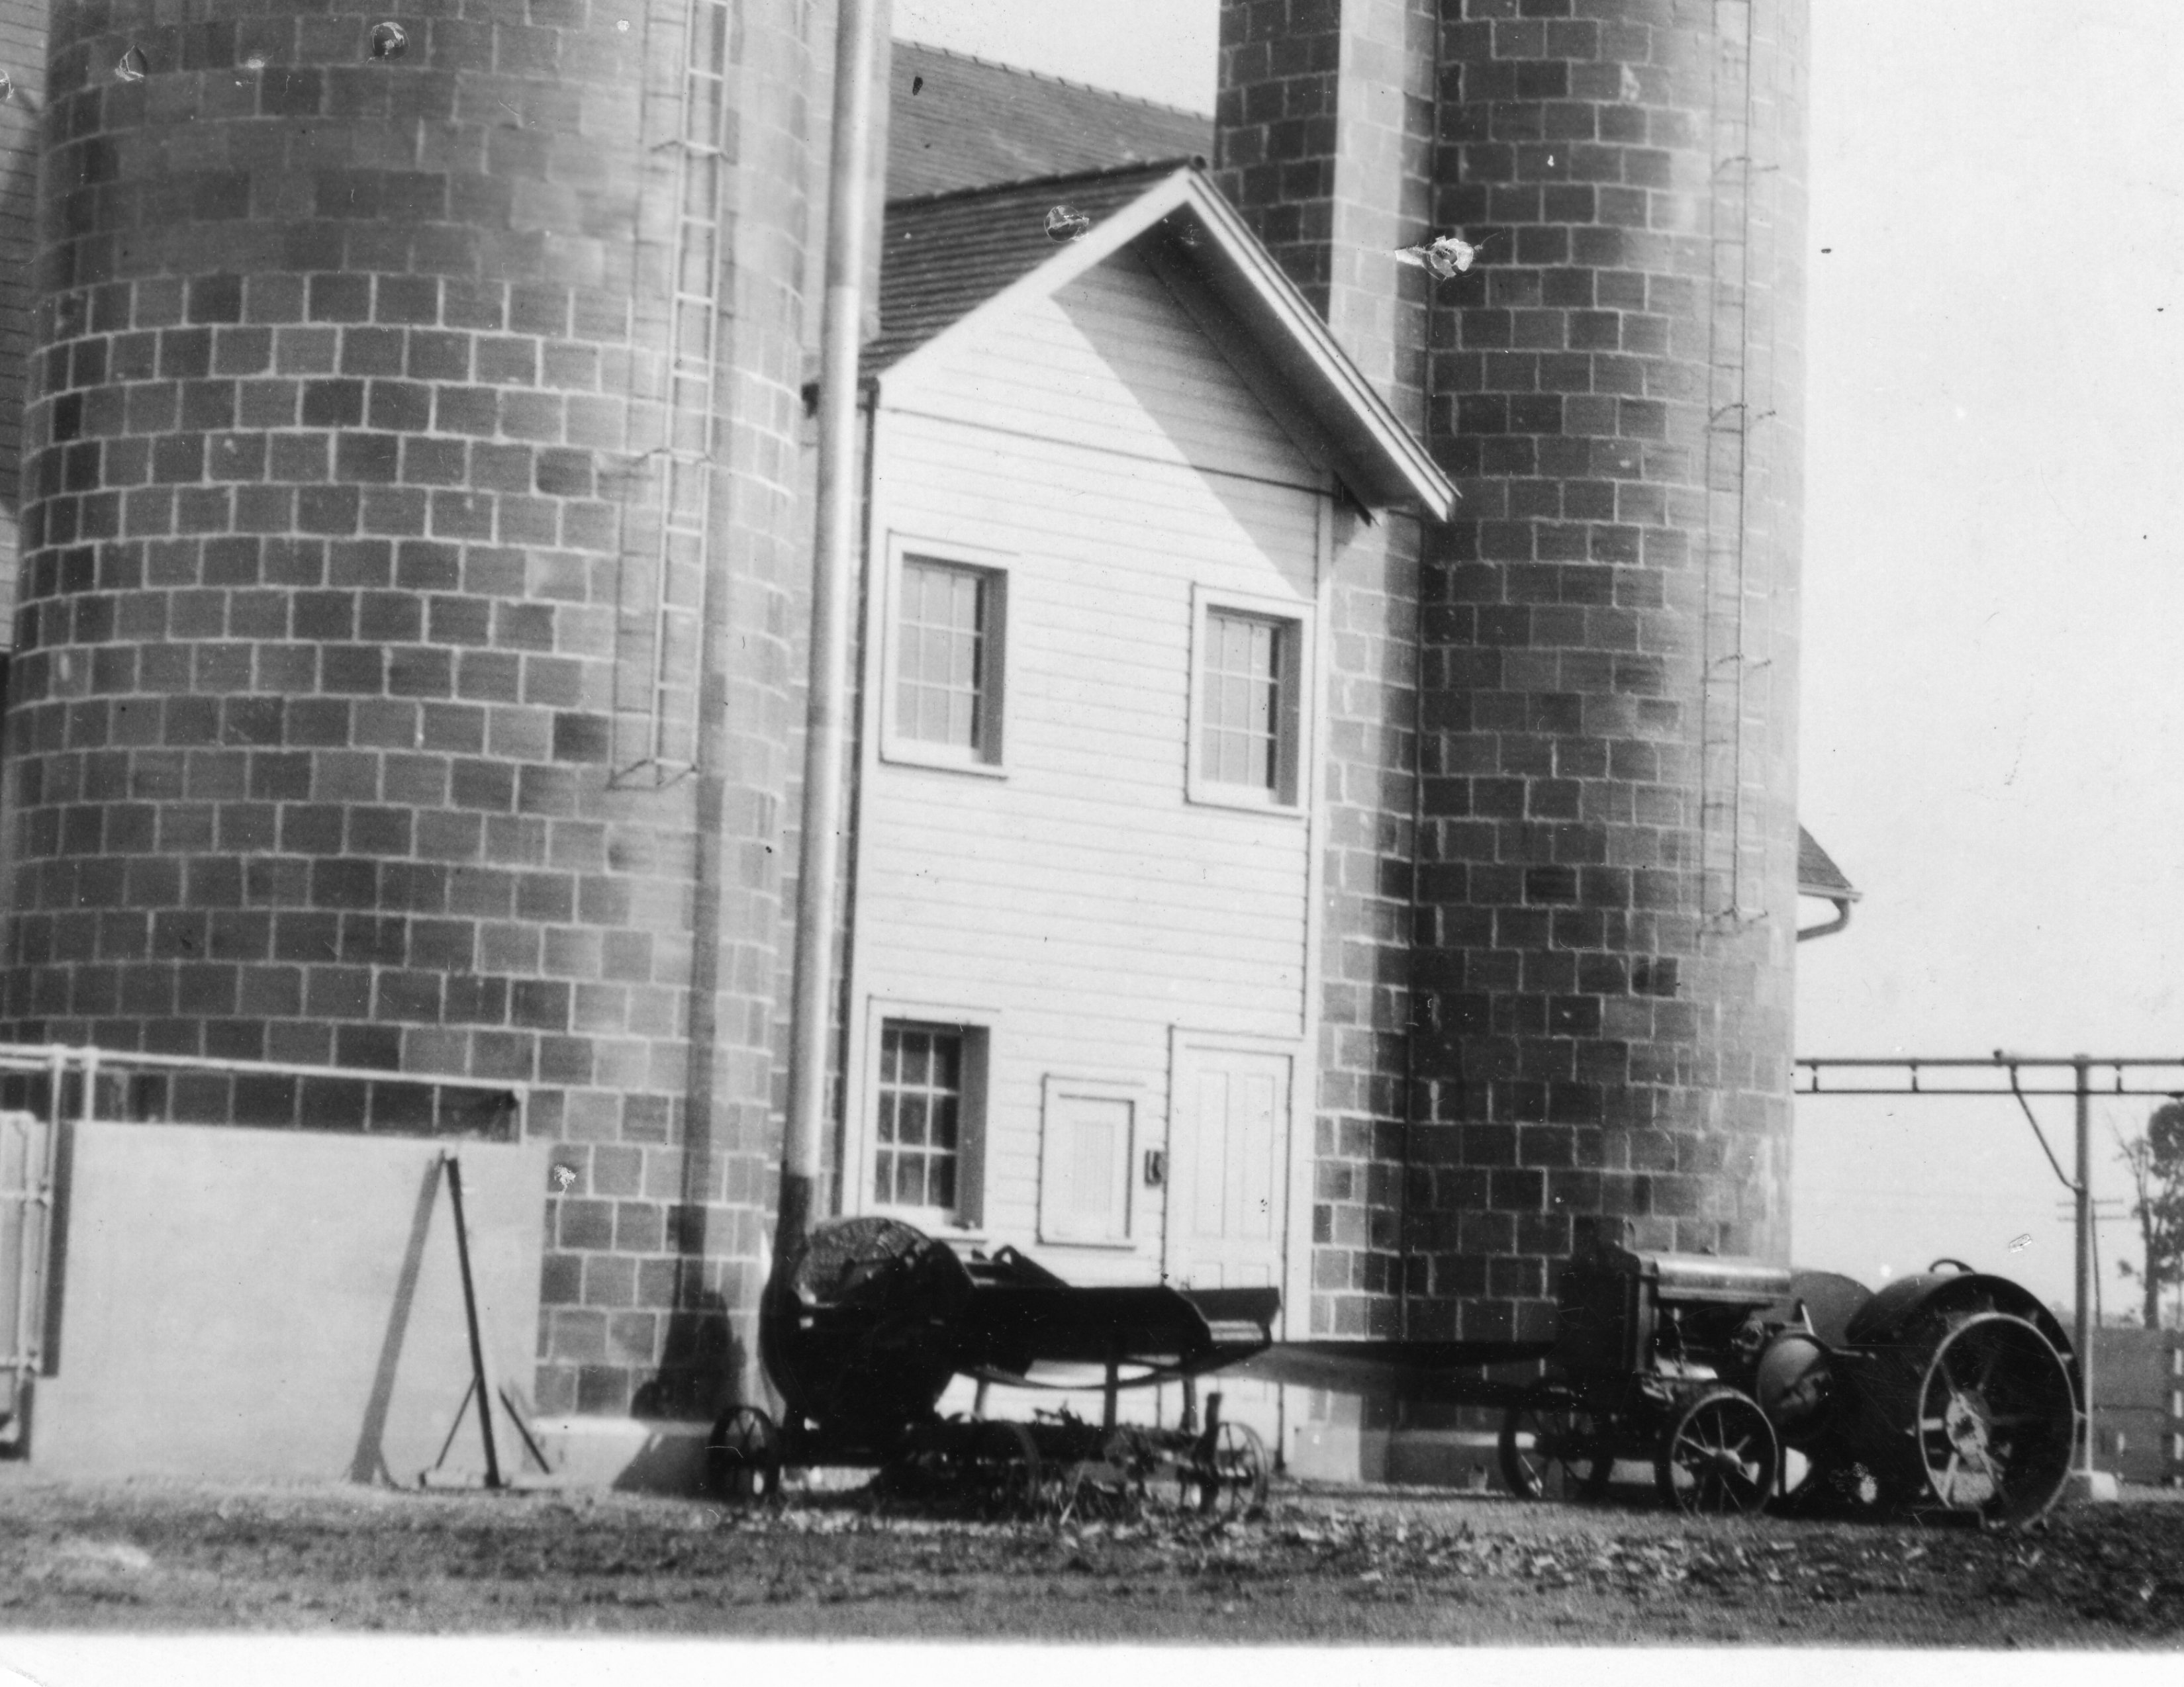 Photograph of dairy barn silos